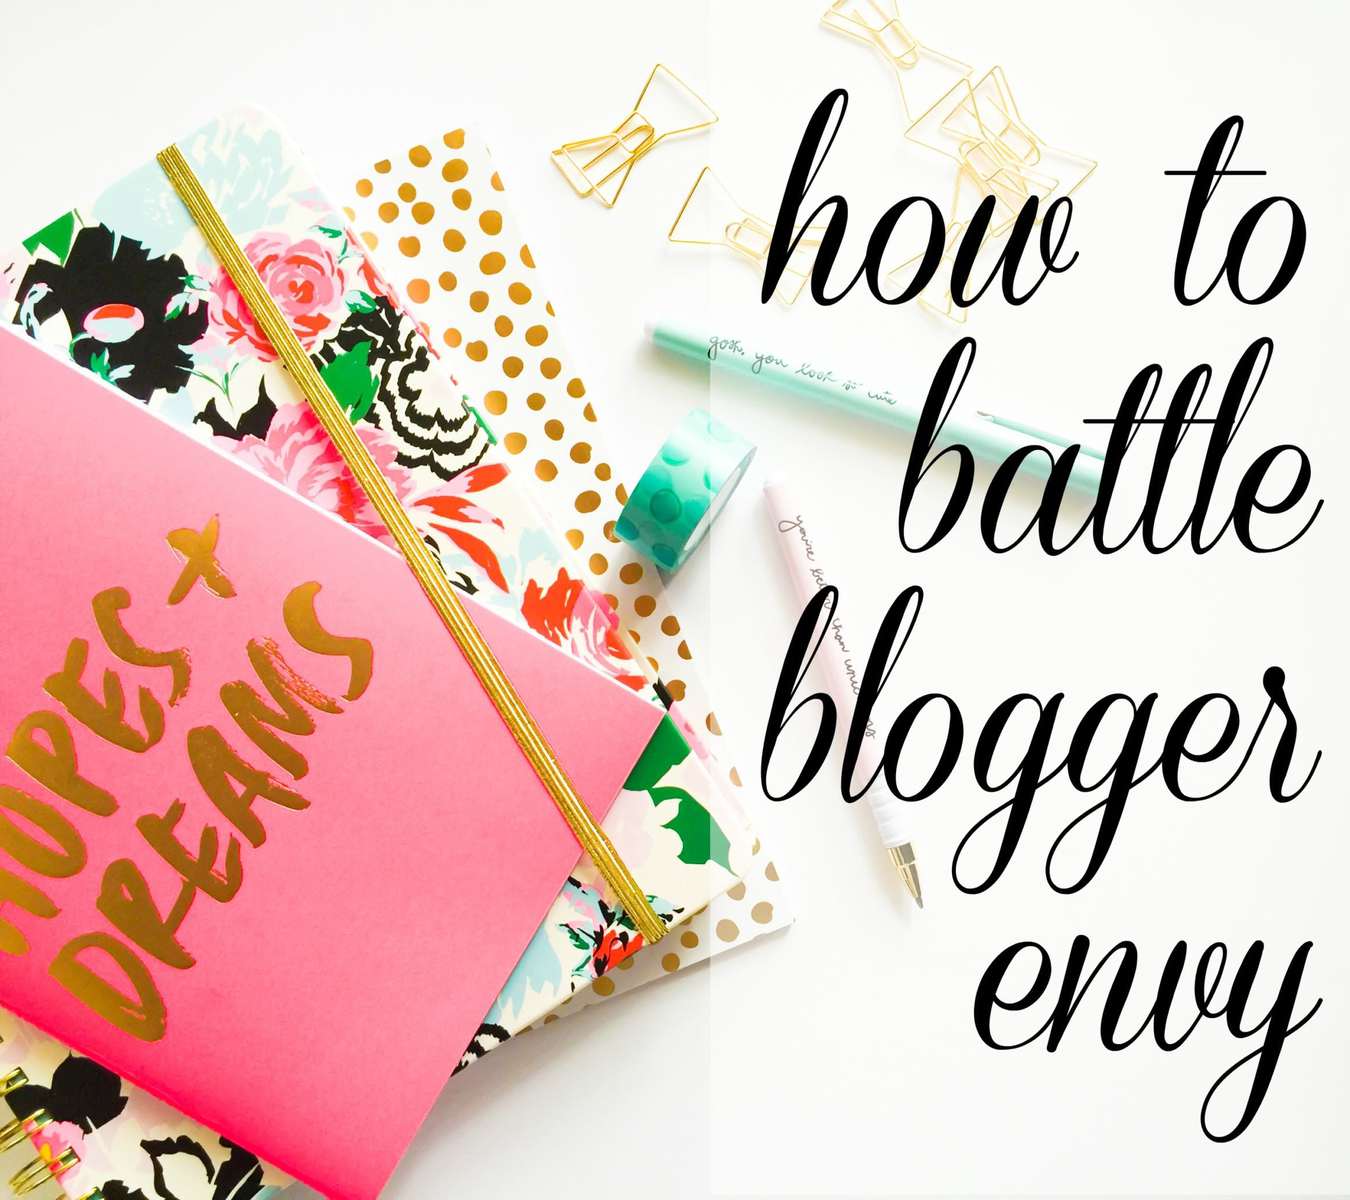 How to Battle Blogger Envy